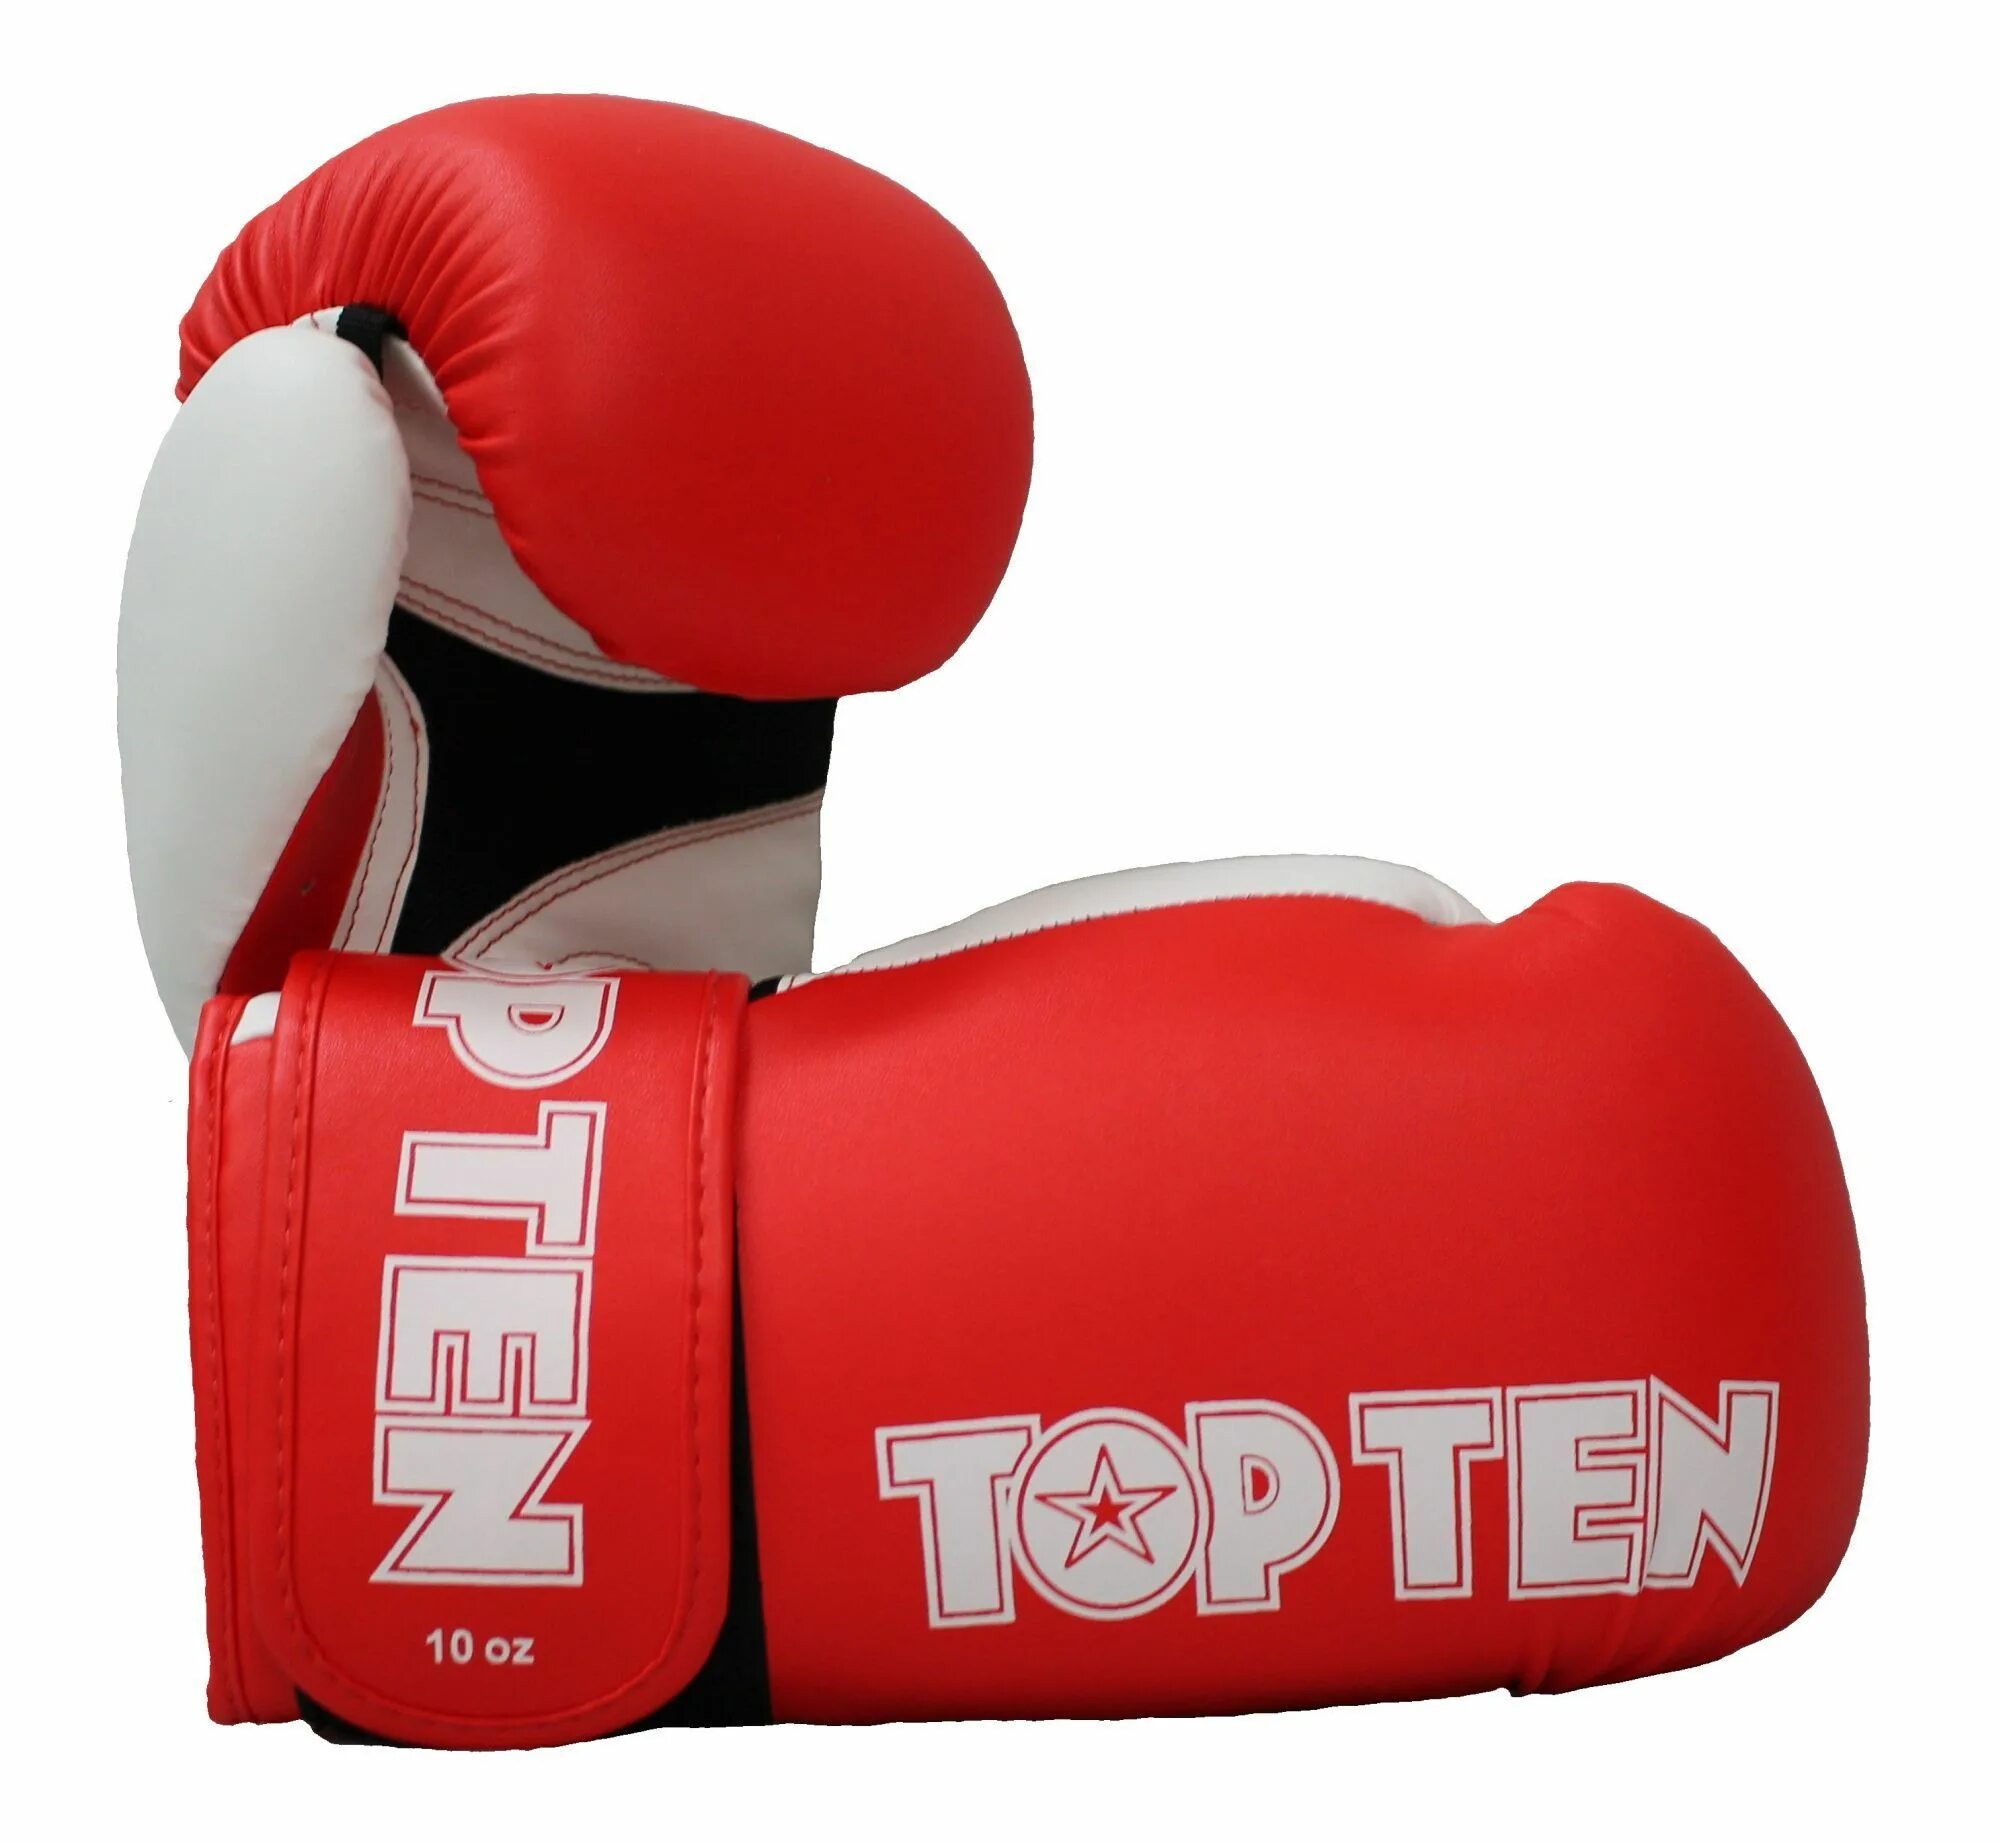 Боксёрские перчатки 12 унций Top ten. Top ten перчатки для бокса 10 oz. Боксерские перчатки Top ten Superfight 3000. Перчатки для кикбоксинга Top ten 10 унций. Ten boxing